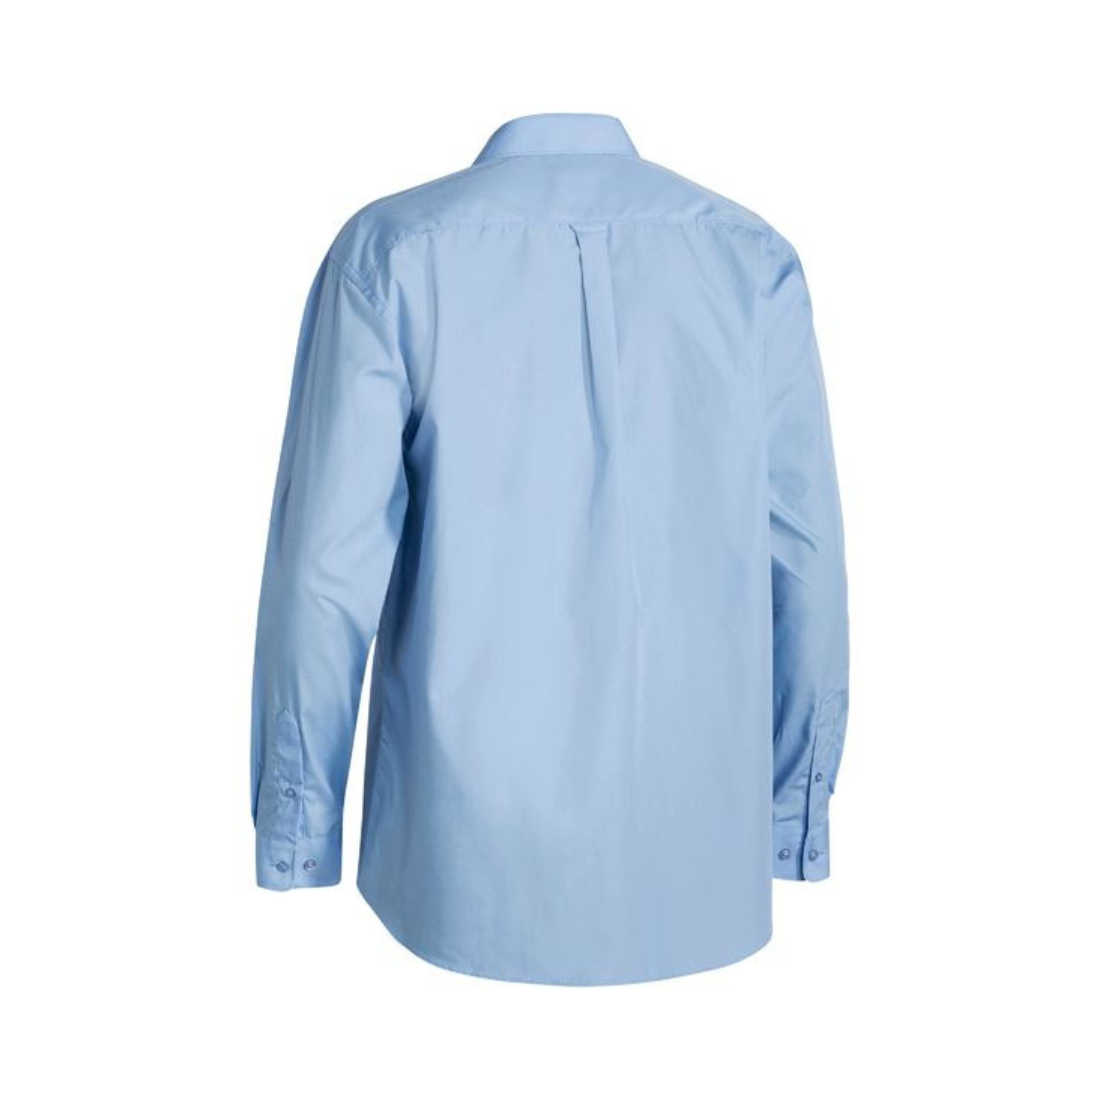 Permanent Press Shirt - Long Sleeve Workwear by Bisley | The Bloke Shop